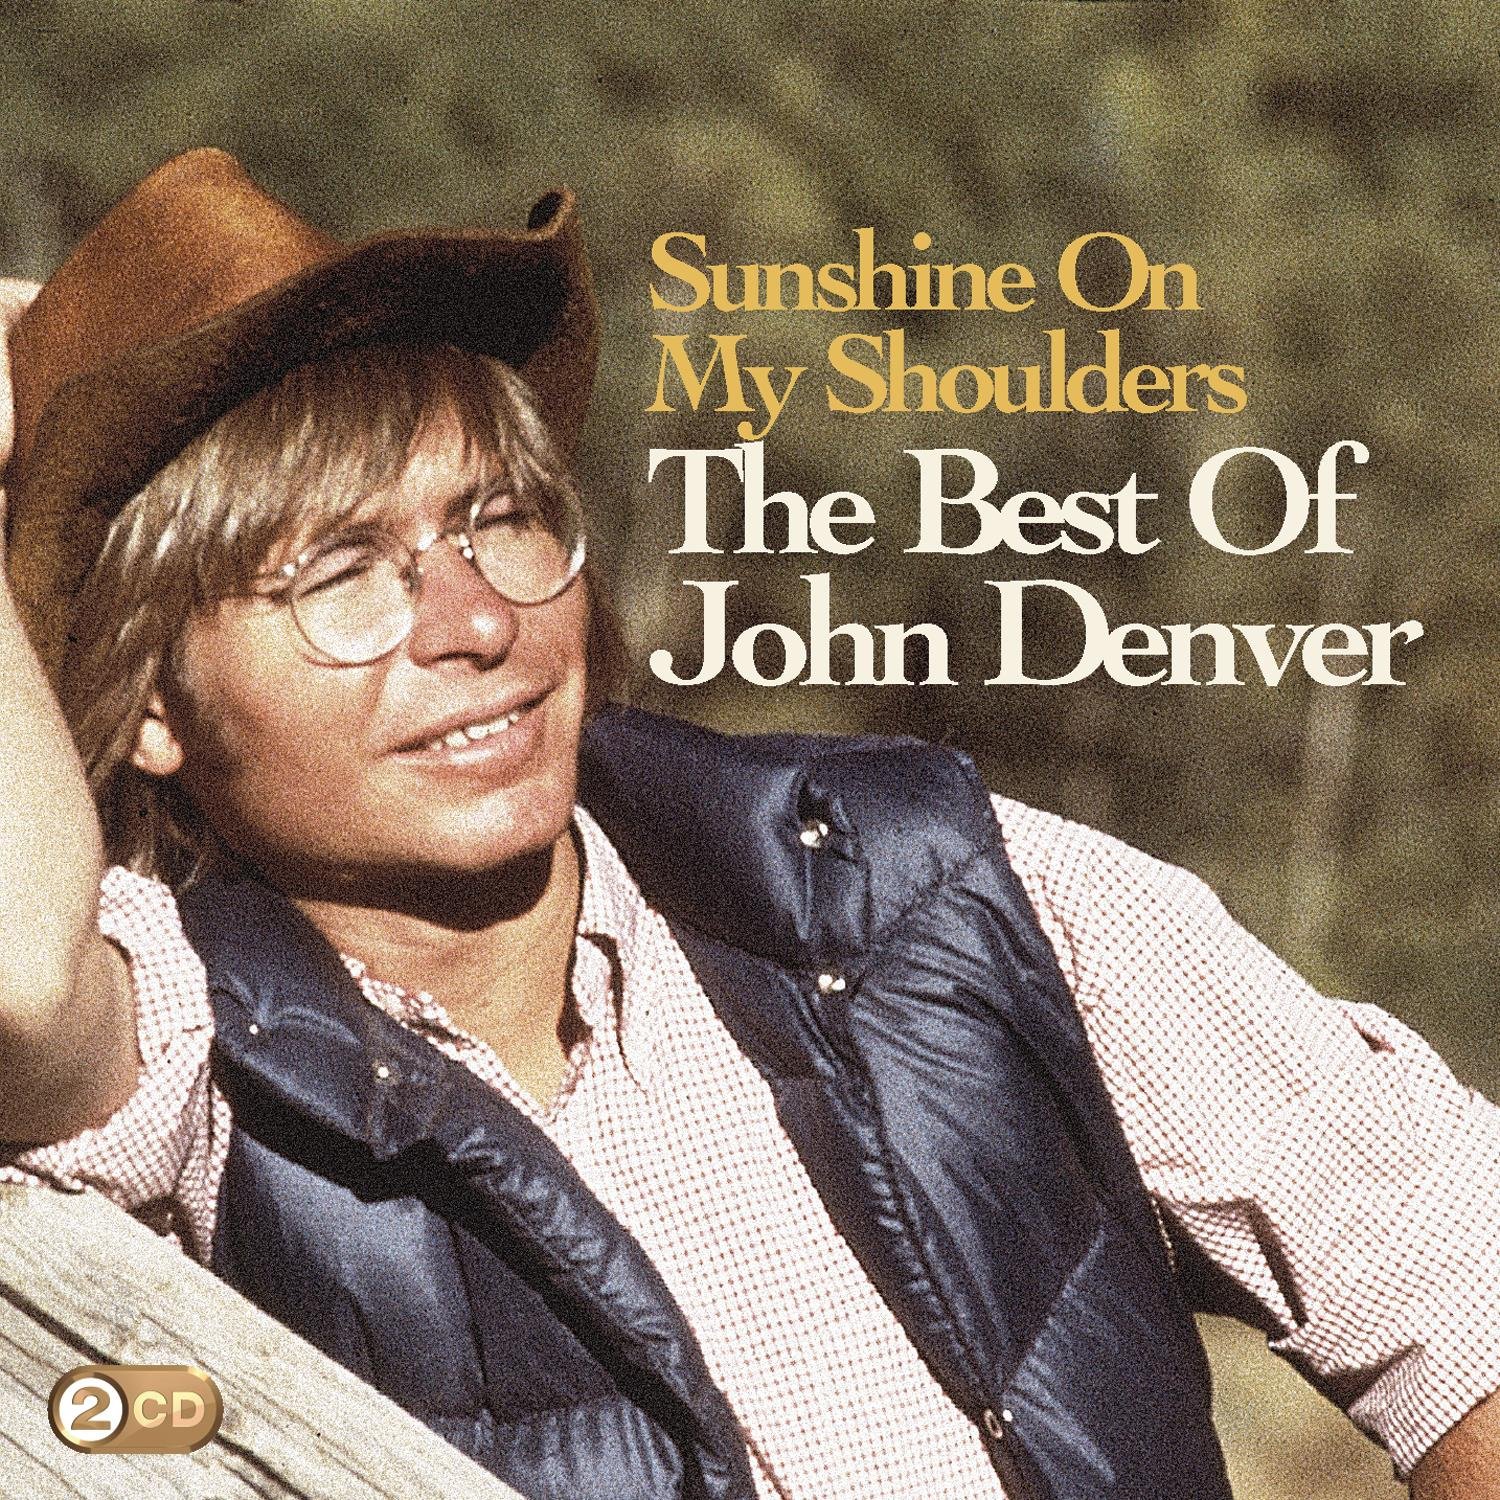 John Denver's "Sunshine on My Shoulders"